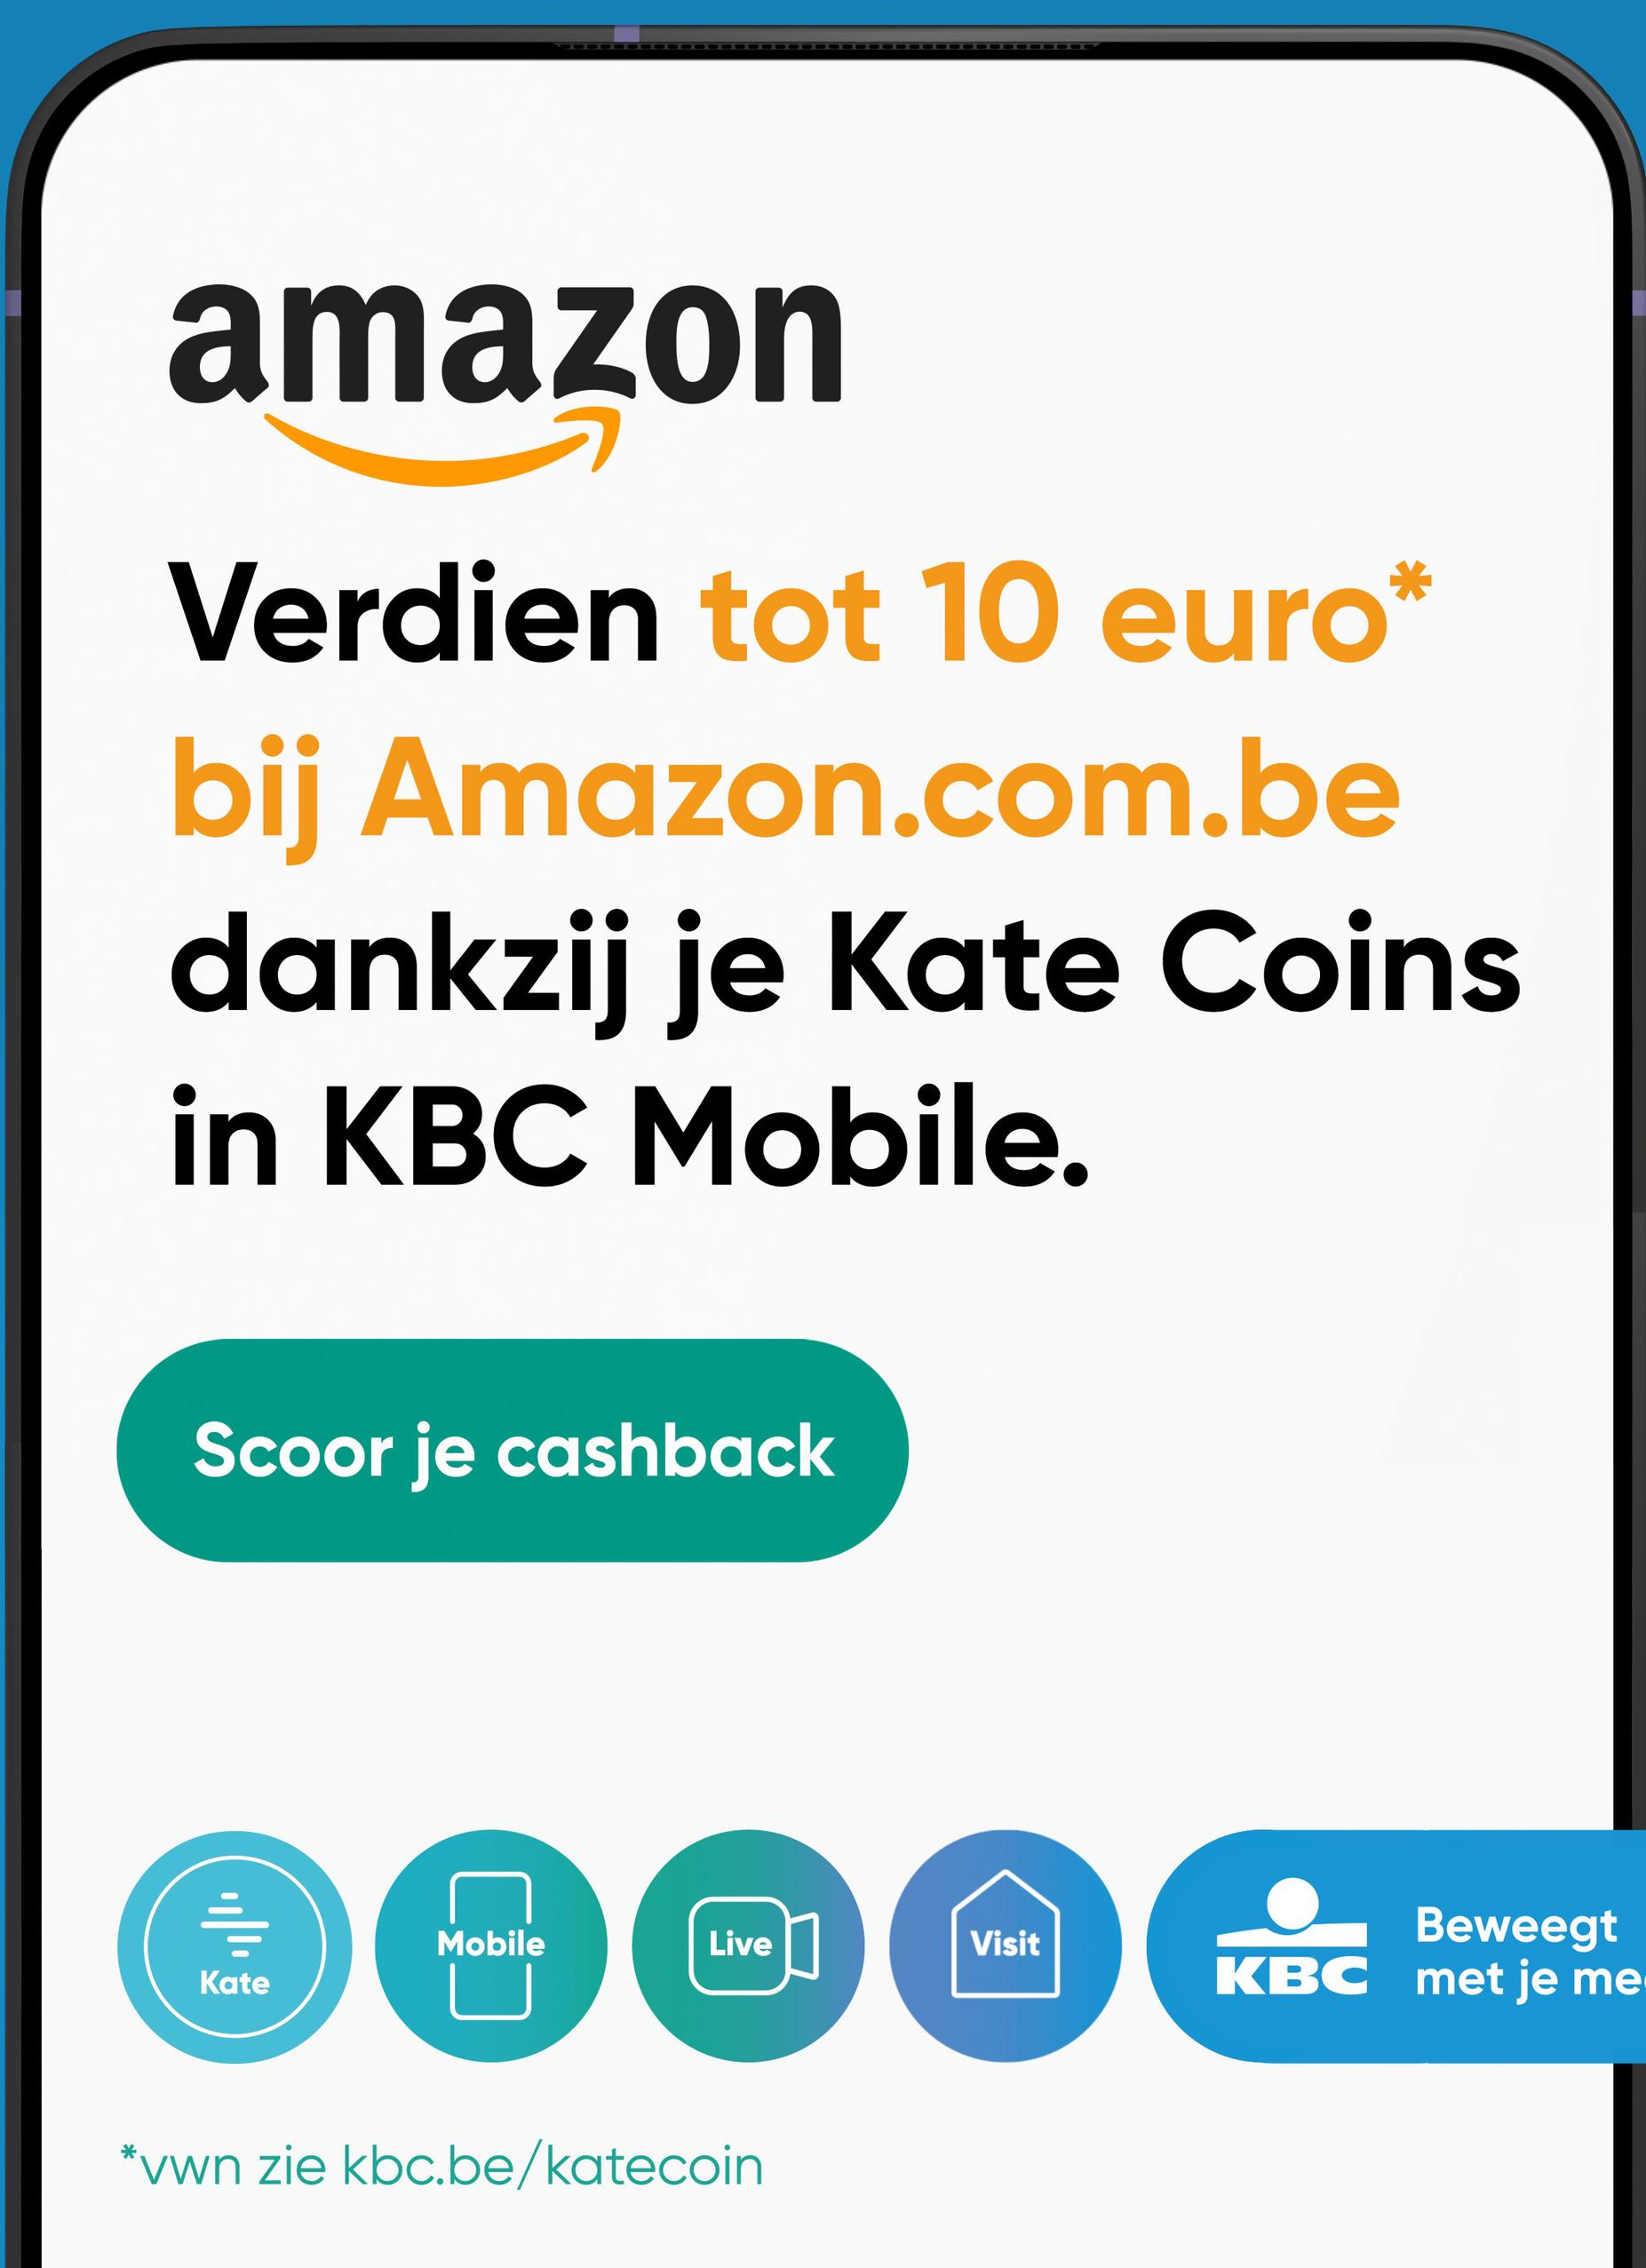 amazon
Verdien tot 10 euro*
bij Amazon.com.be
dankzij je Kate Coins
in KBC Mobile.
Scoor je cashback
Mobile
Live]
Beweegt
Visit
Kate
KBC met je me
*vwn zie kbc.be/katecoin